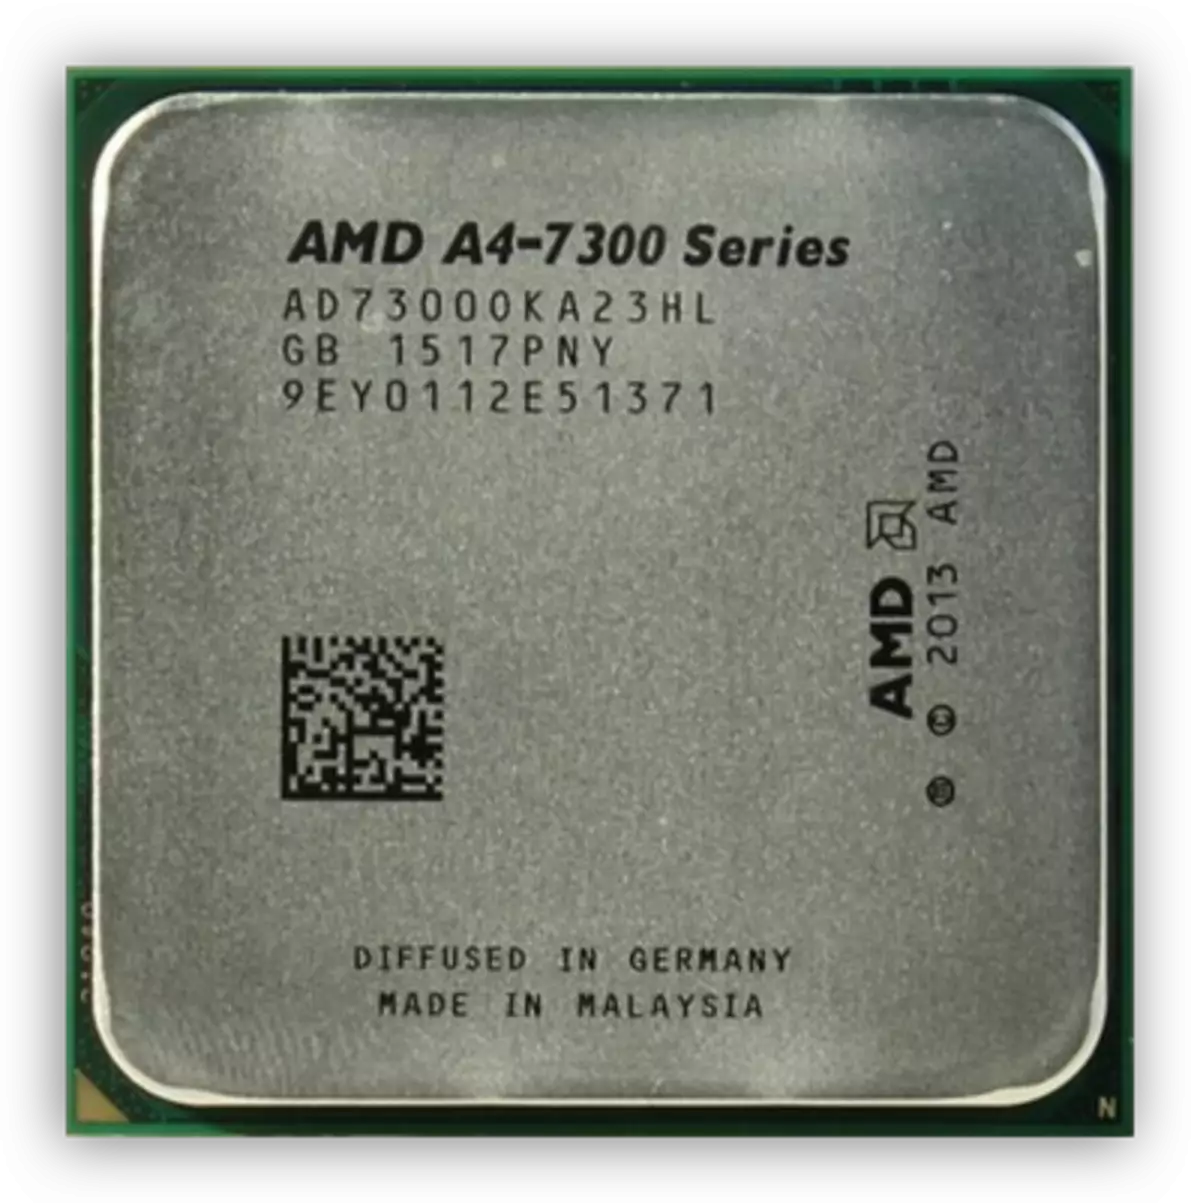 Prosesor AMD A4 7300 ing arsitektur Richland